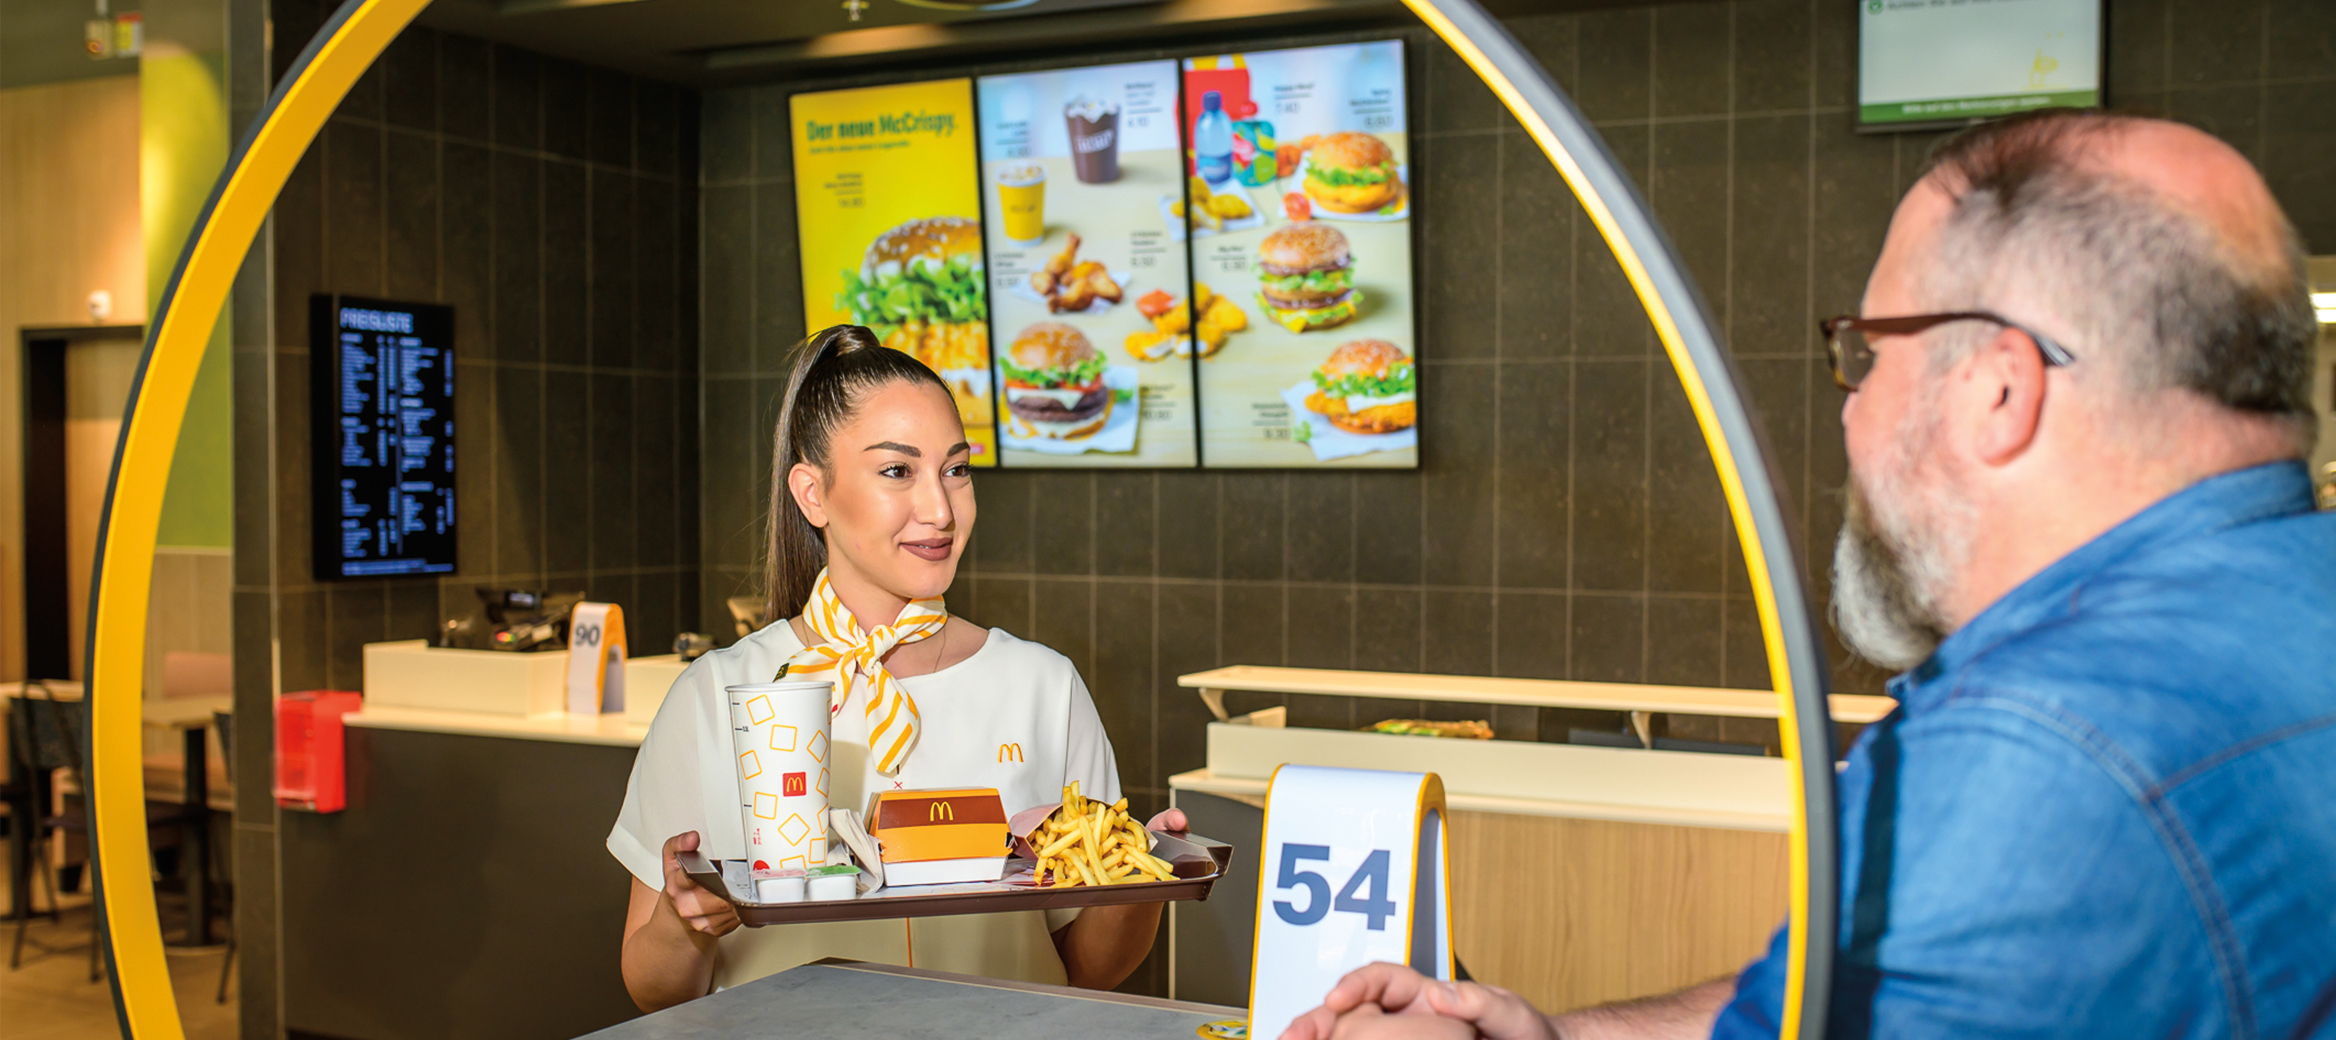  McDonalds Ristorante Sihlcity Servizio a tavola